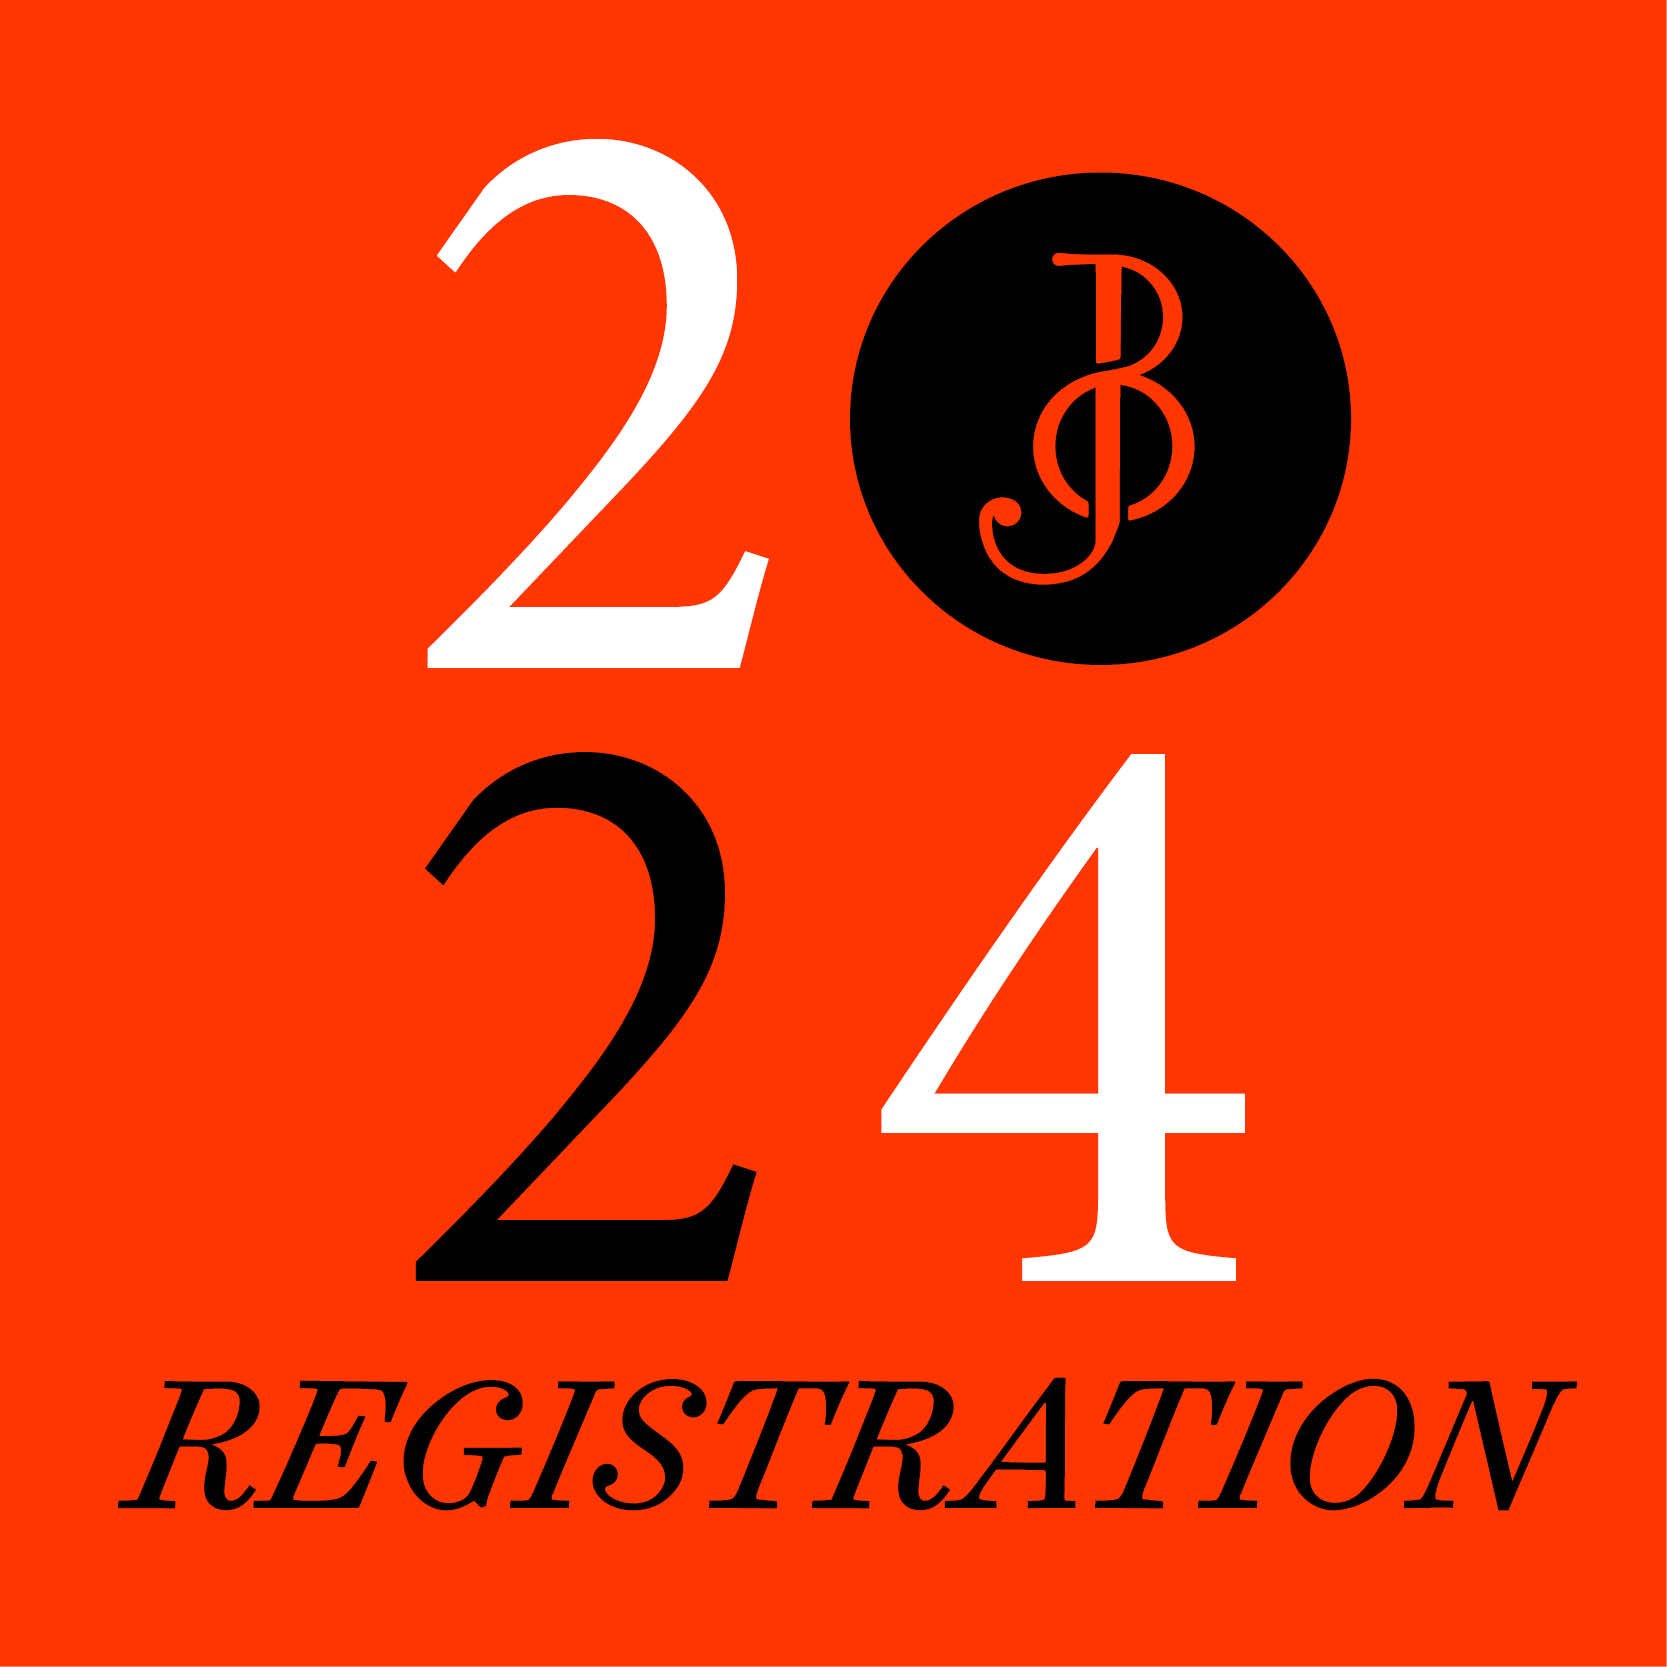 2024 Registration